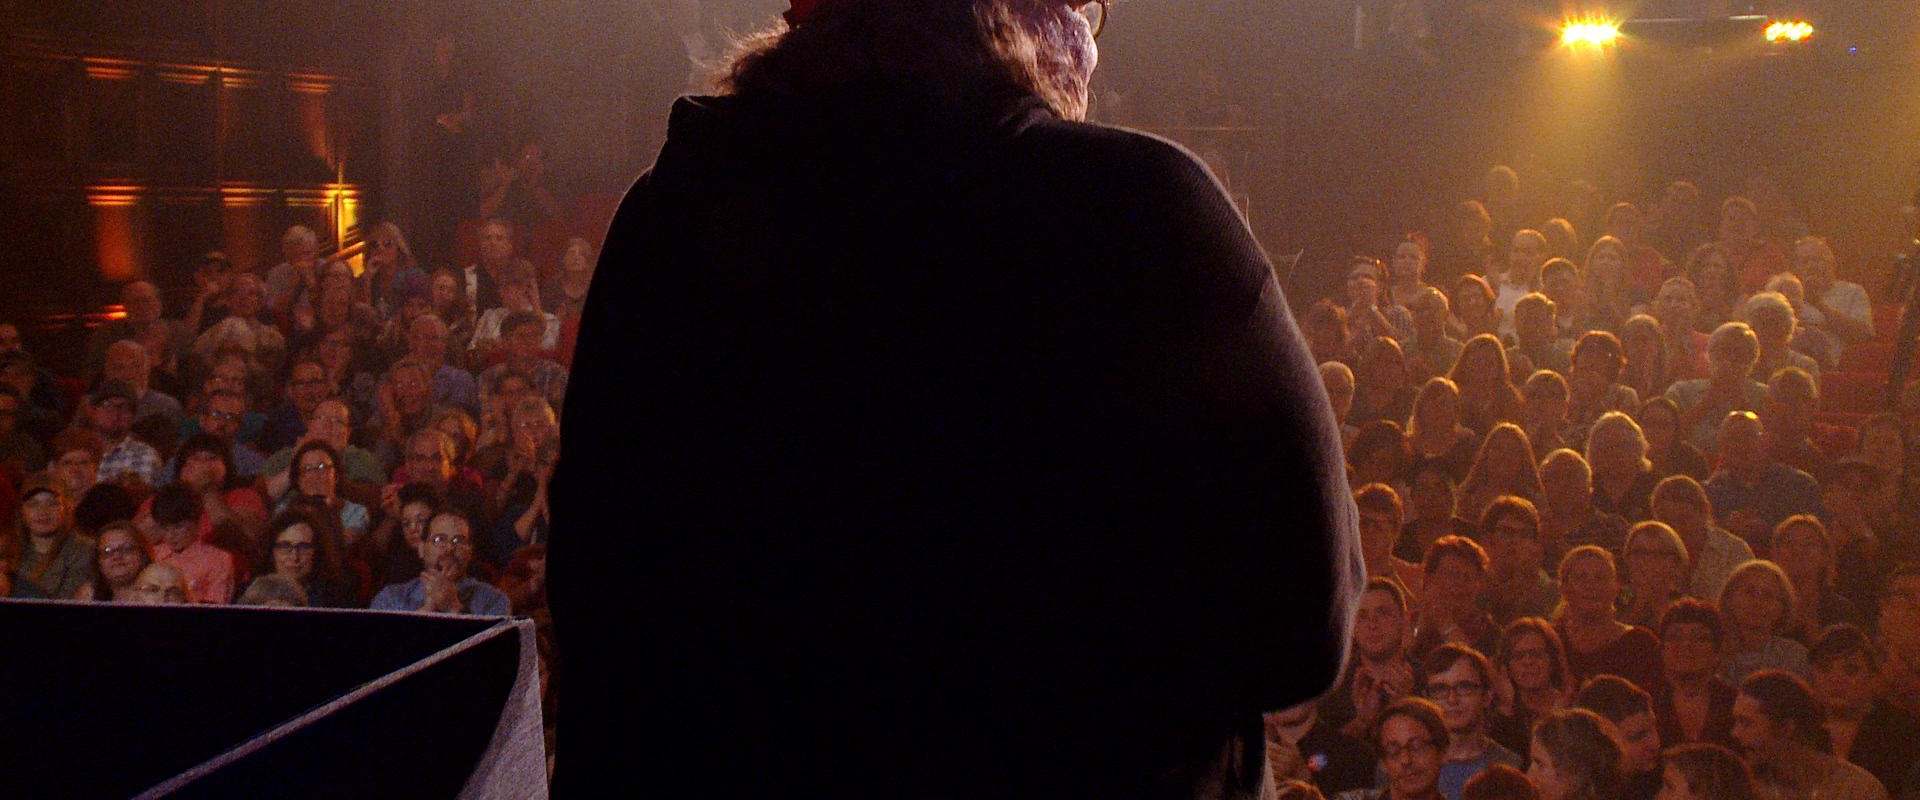 Michael Moore in TrumpLand background 1